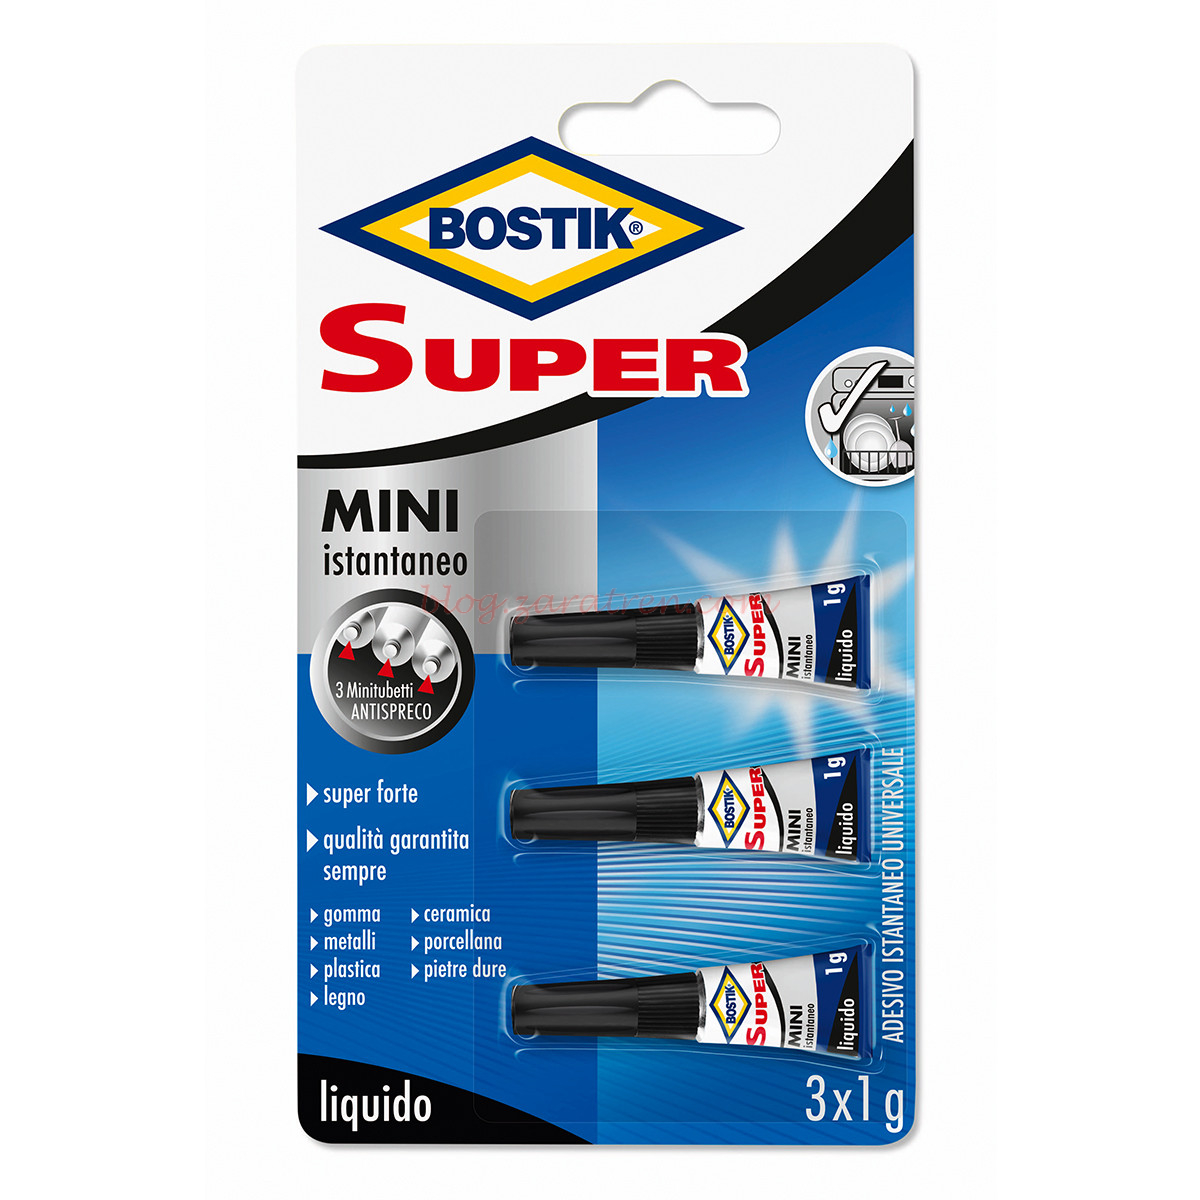 Bostik – Adhesivo Super gel Instantaneo mini x 3, 1 Gramo unidad, Ref: D2743